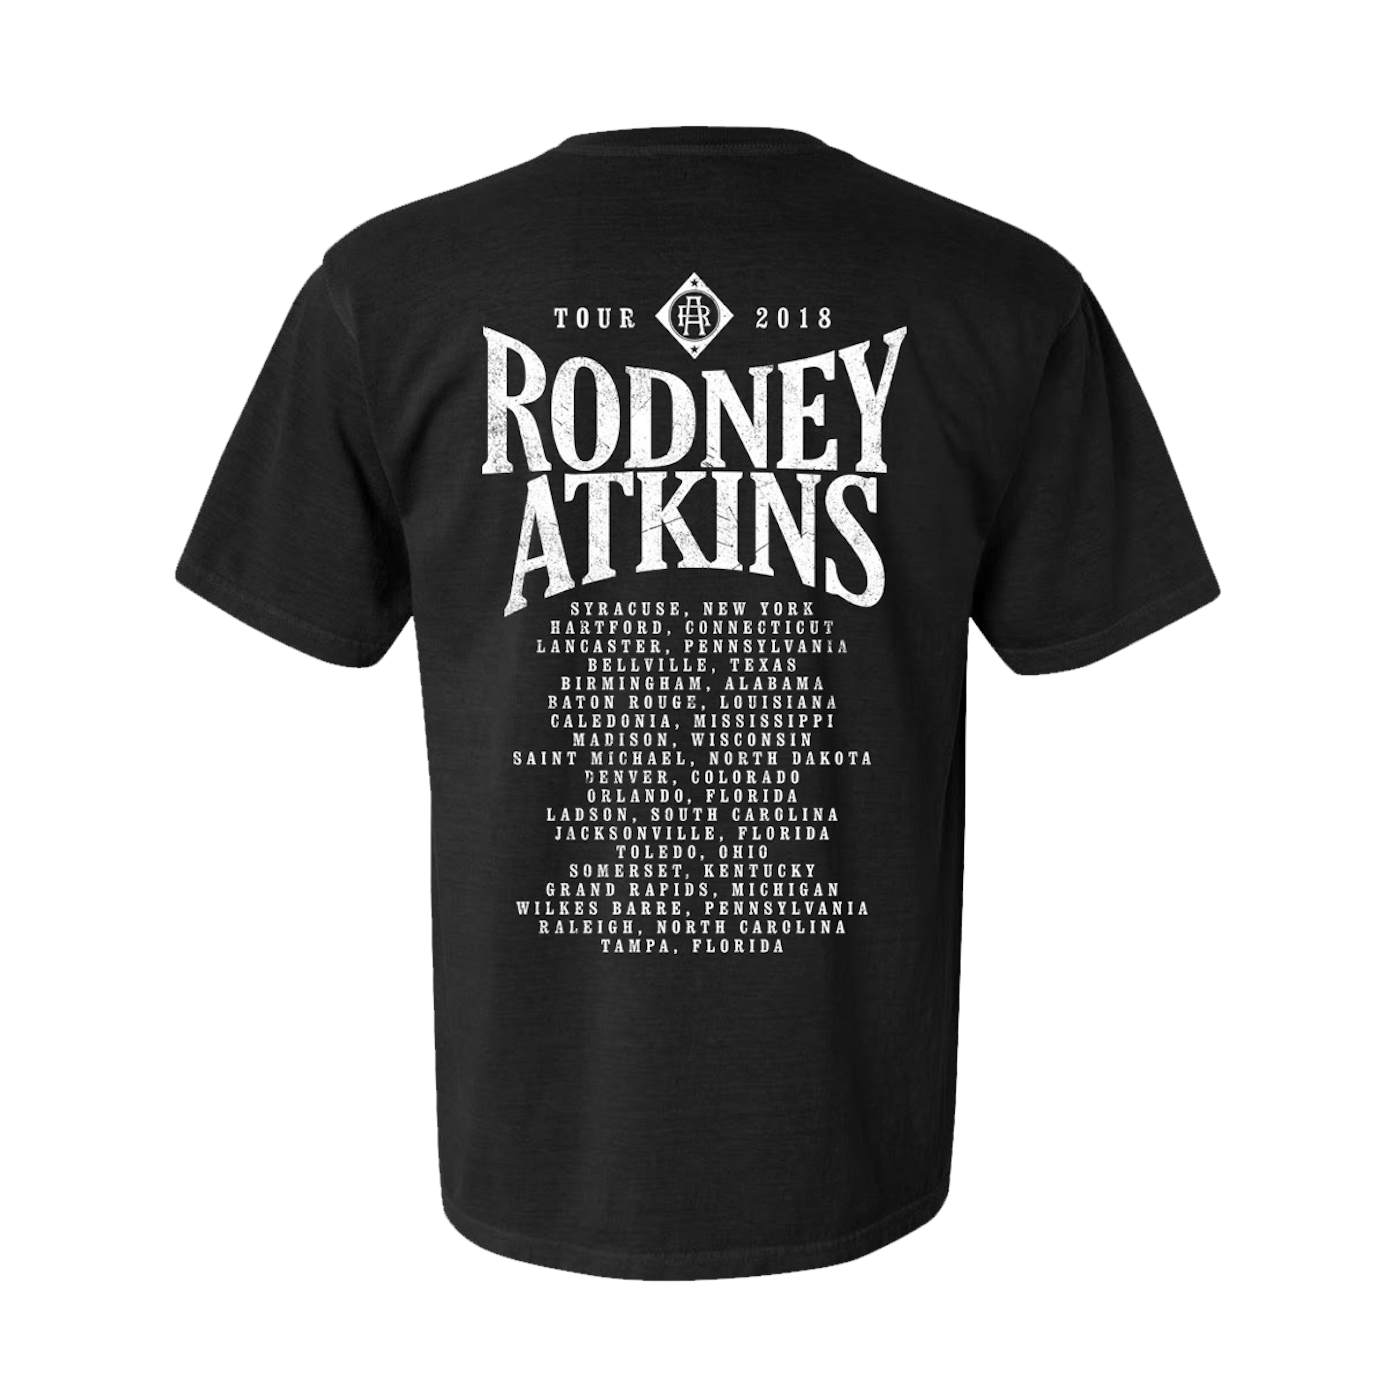 Rodney Atkins 2018 Tour T-shirt